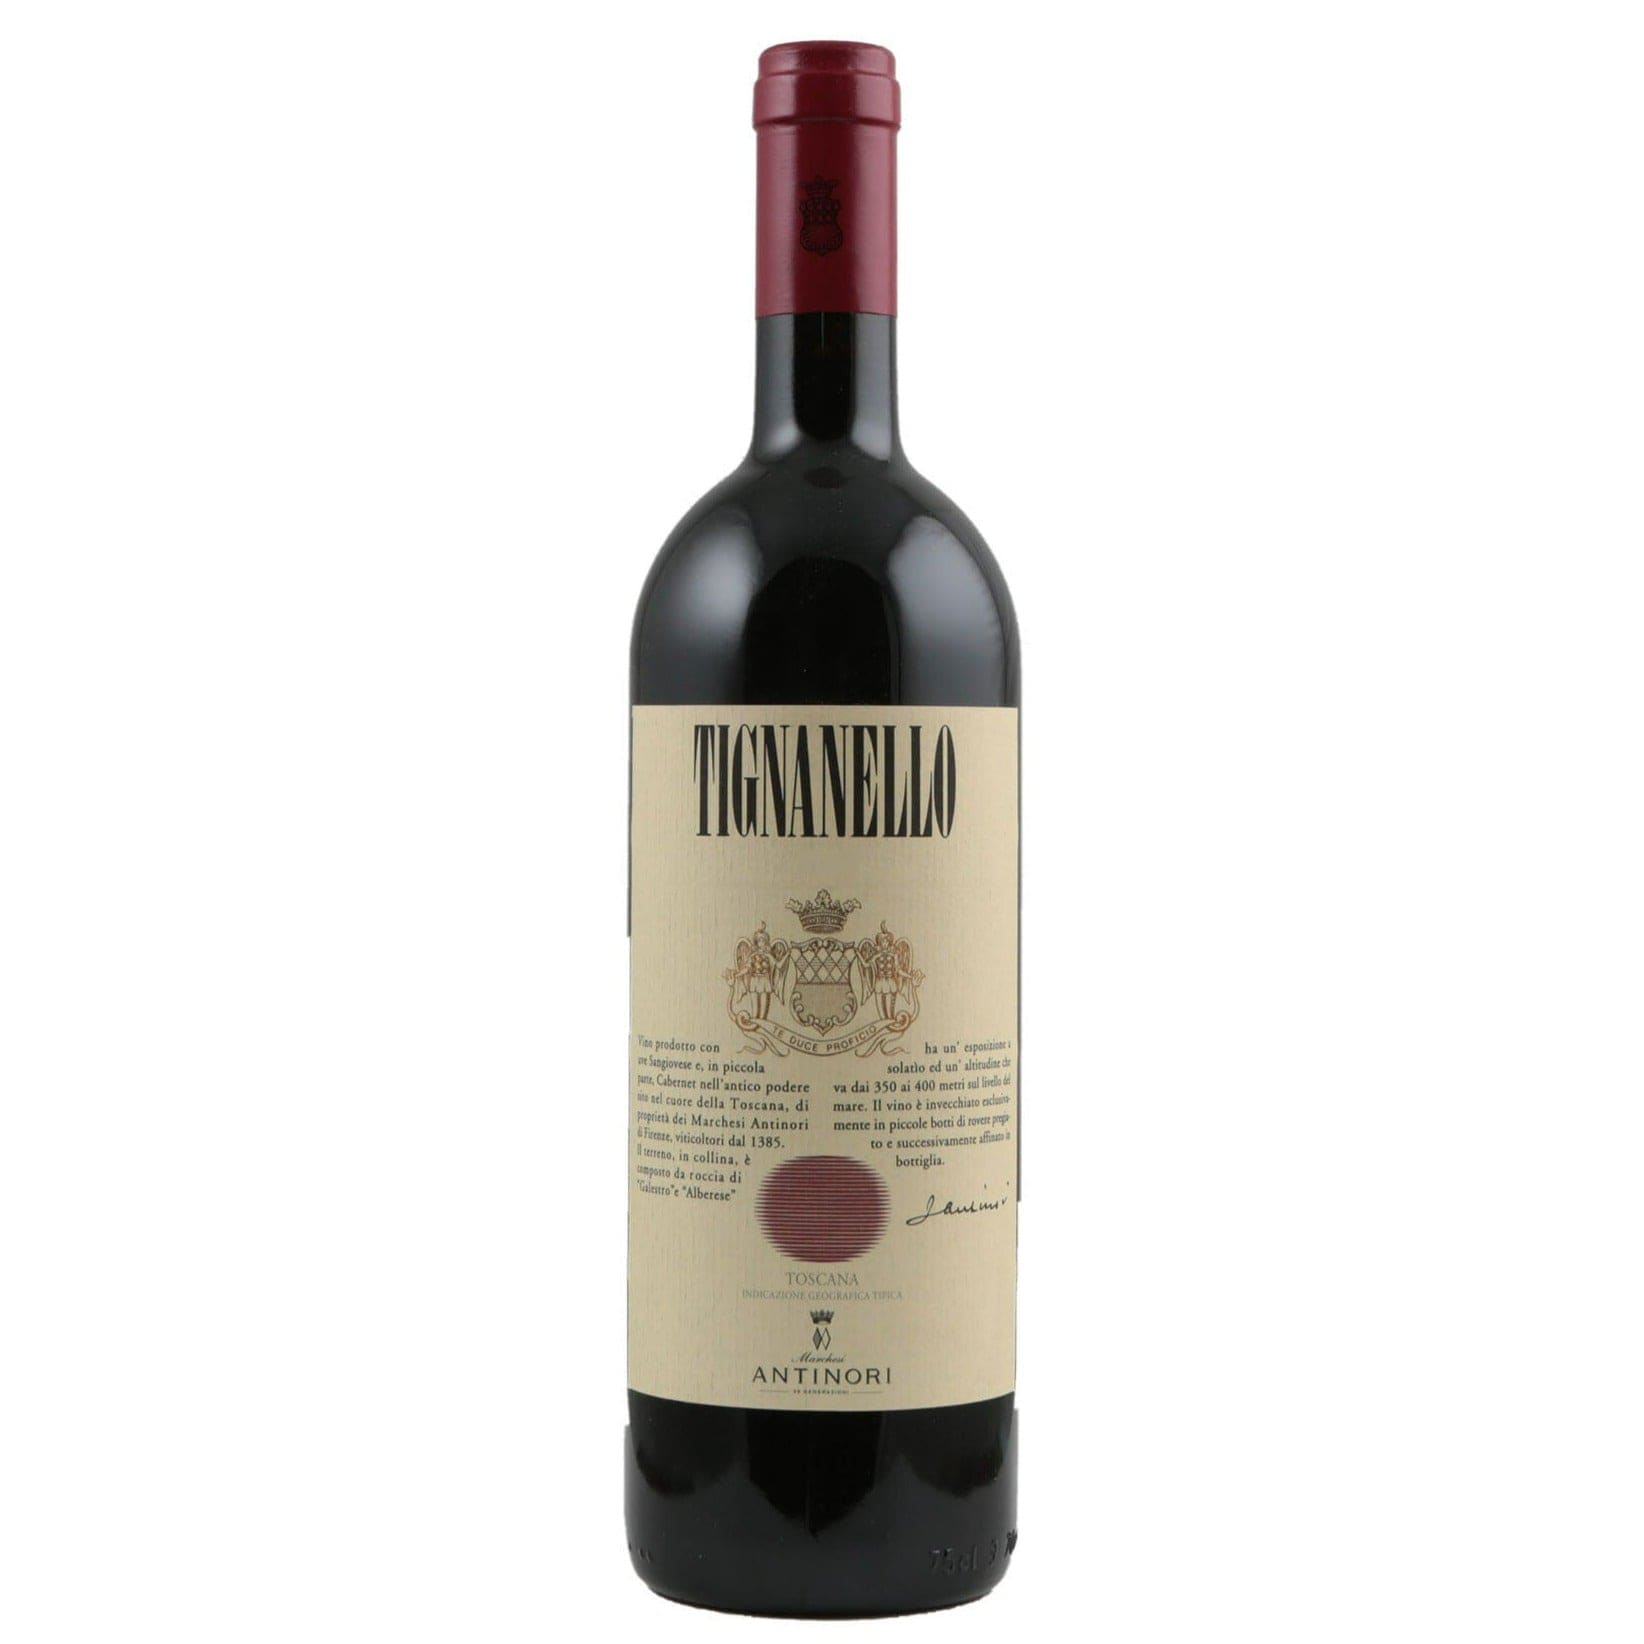 Single bottle of Red wine Marchesi Antinori, Tignanello, Toscana IGT, 2013 85% Sangiovese, 10% Cabernet Sauvignon & 5% Cabernet Franc